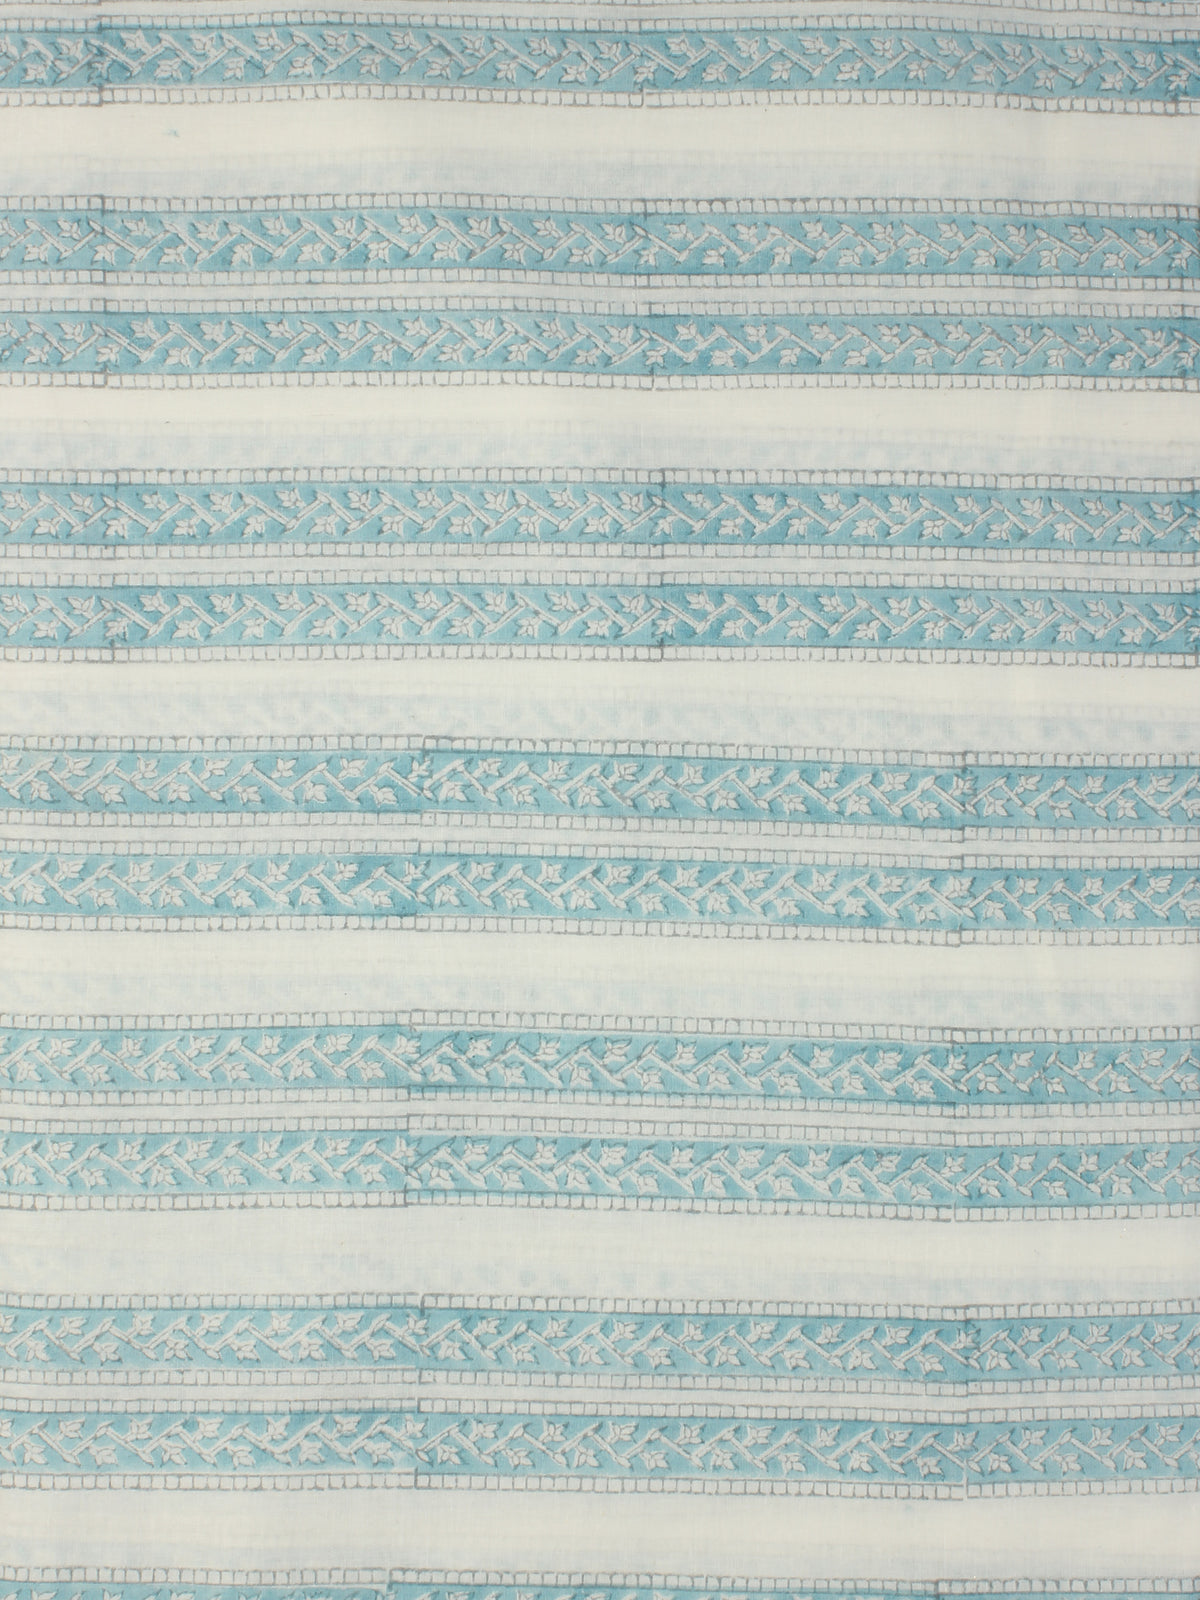 White Sky blue Hand Block Printed Cotton Fabric Per Meter - F001F2337